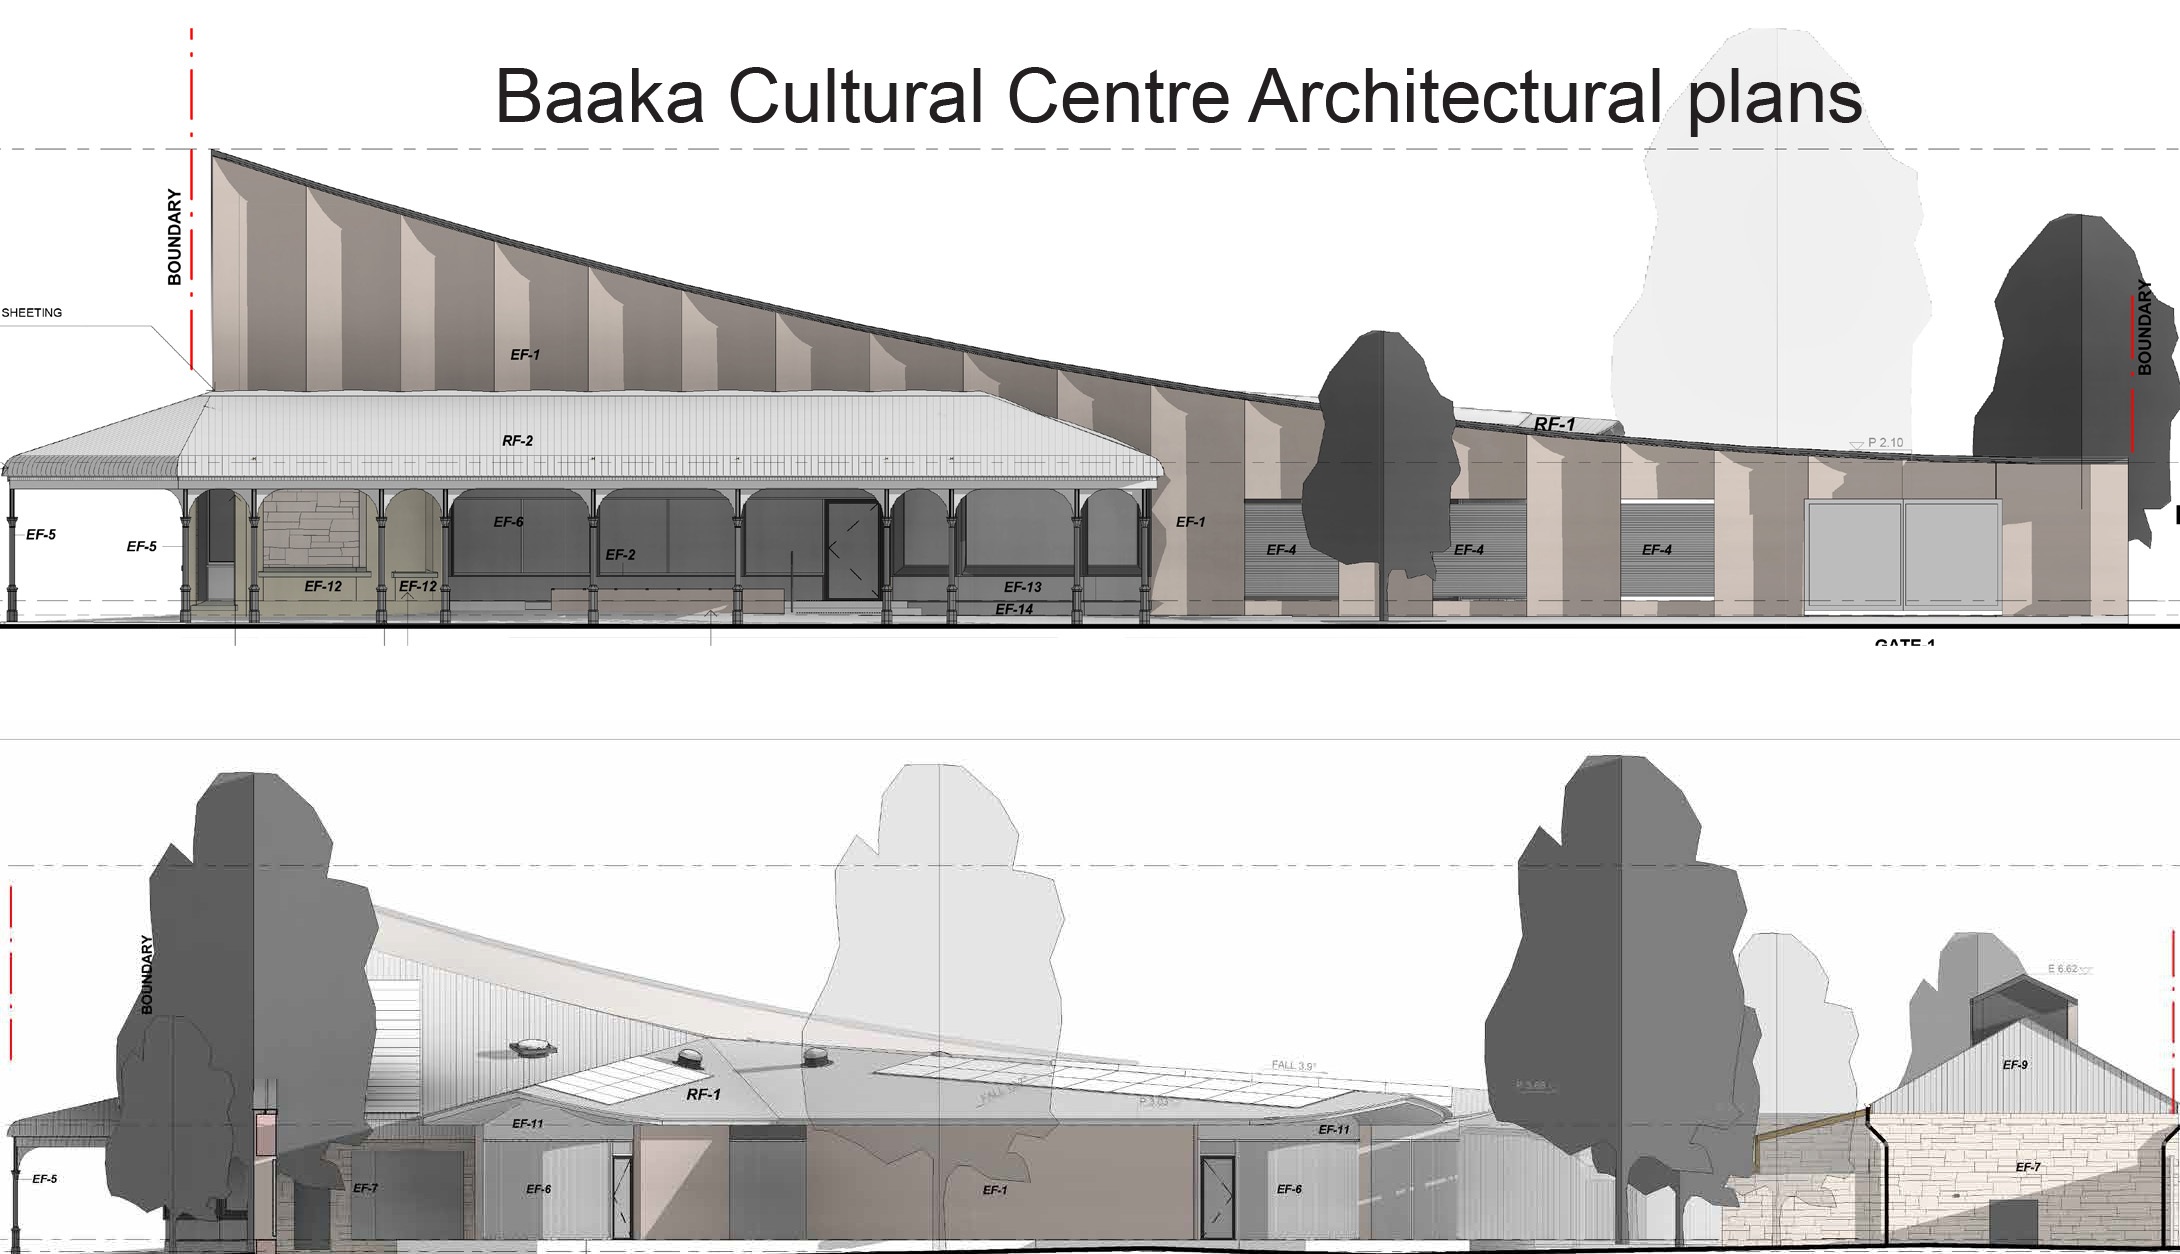 Baaka-Cultural-Centre-Architectural-Plans.jpg